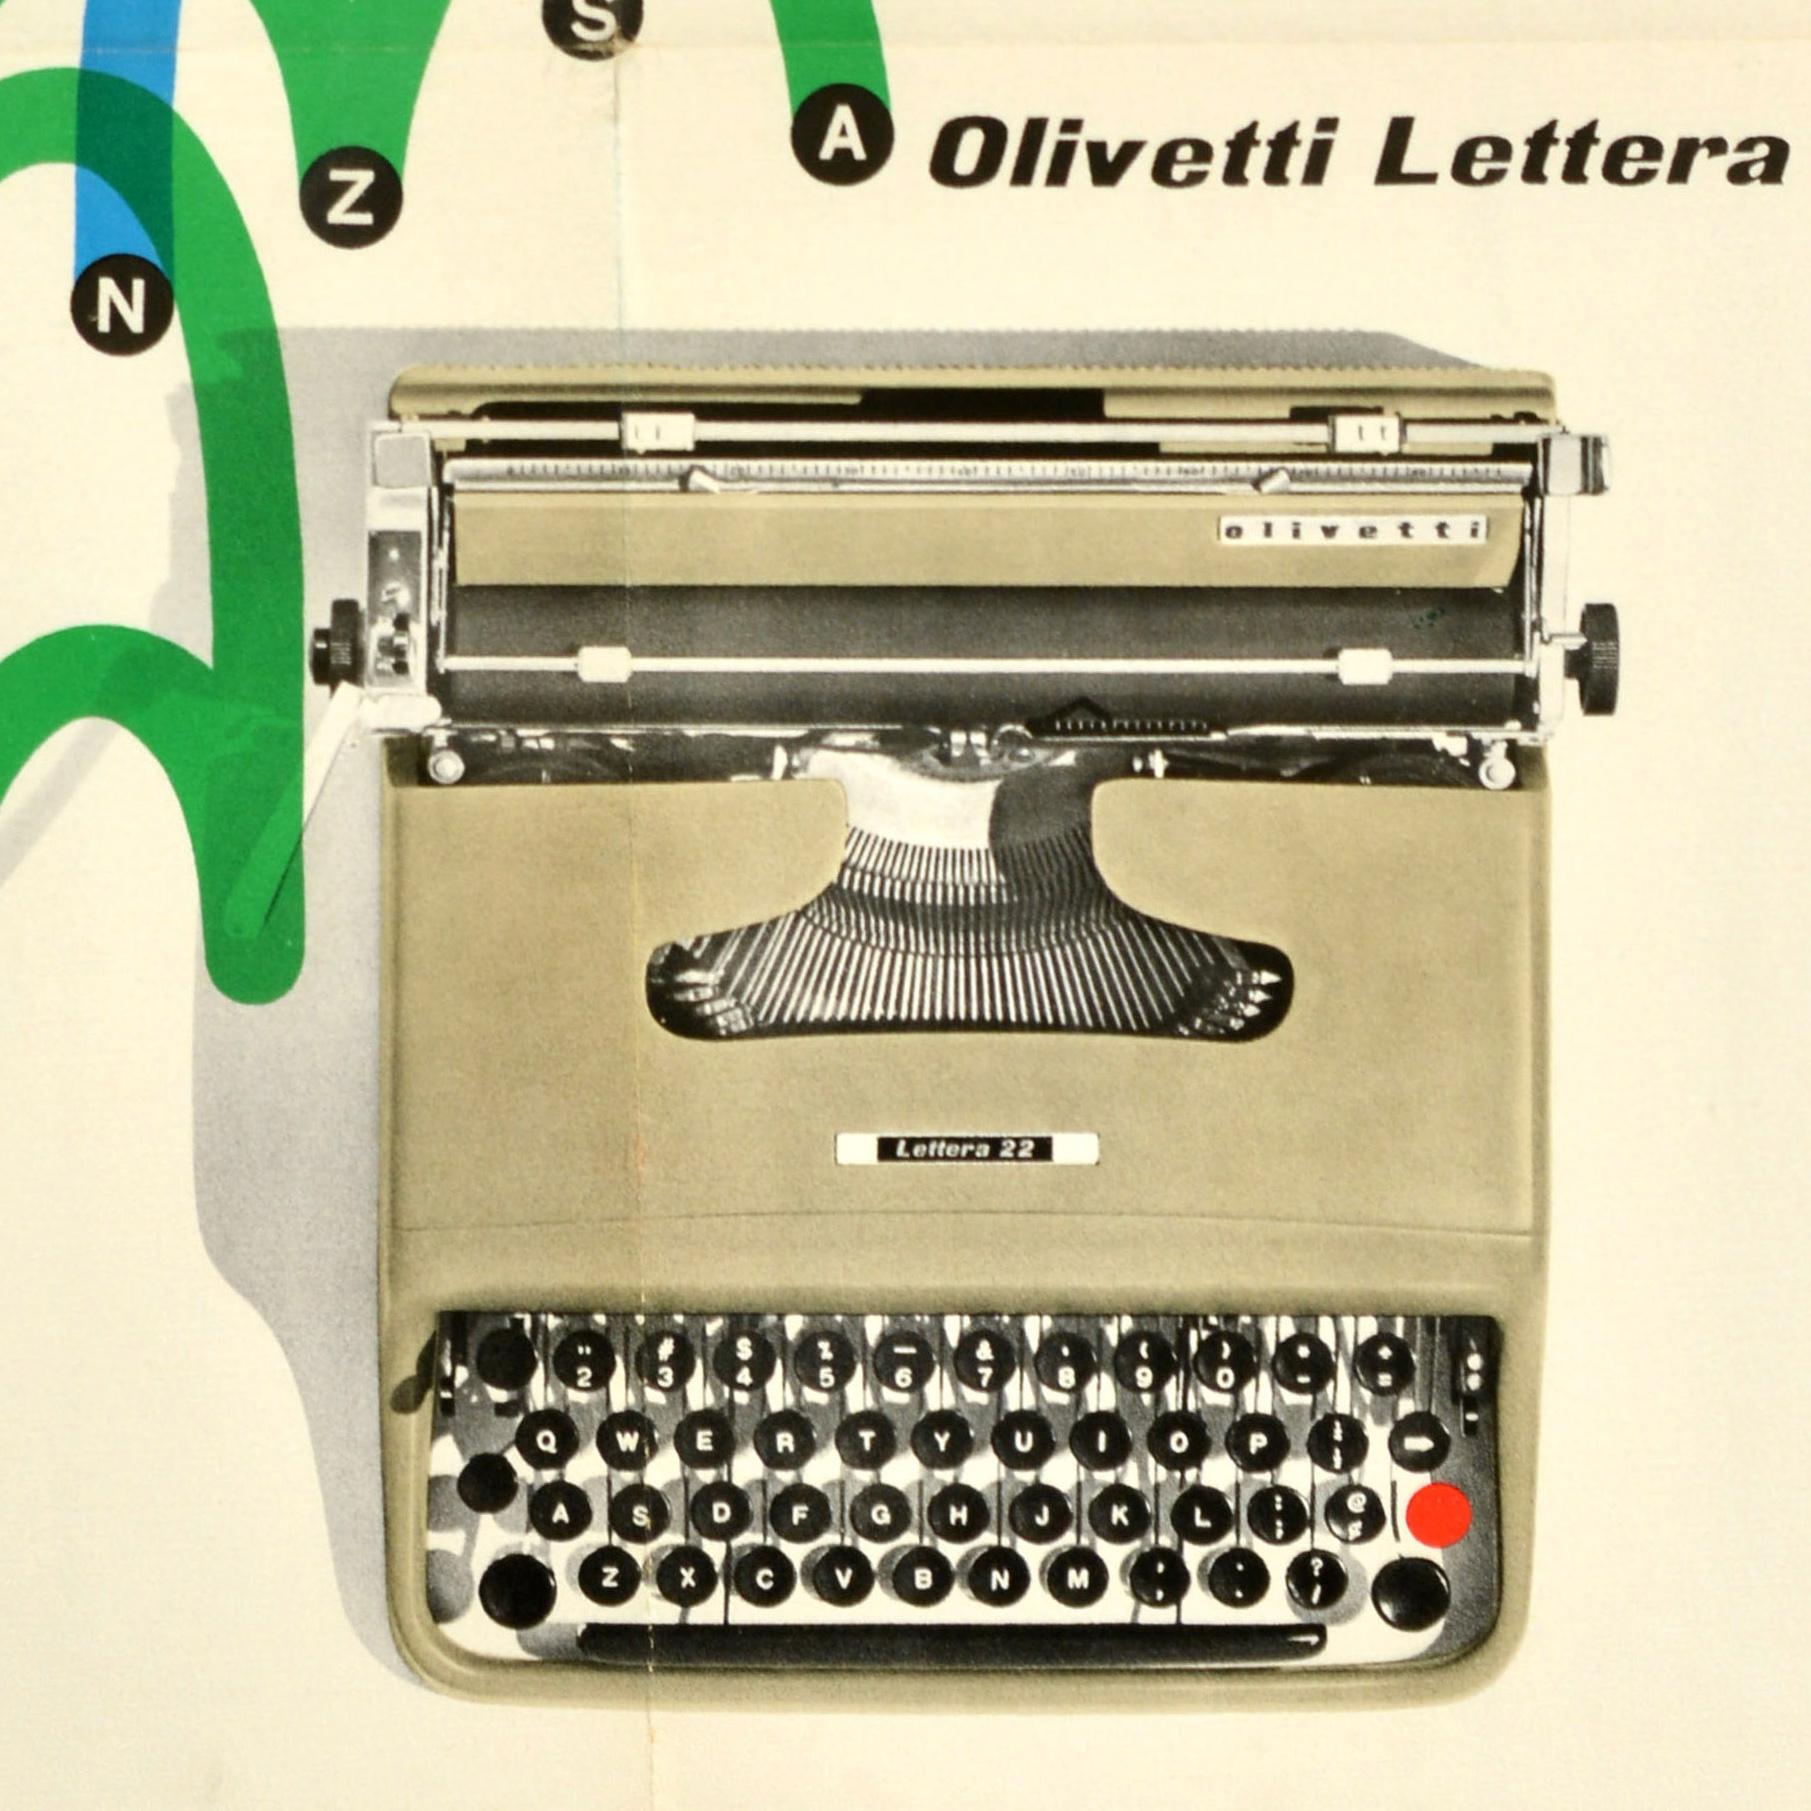 Original Vintage Advertising Poster Olivetti Lettera 22 Typewriter Alphabet Art - Print by Giovanni Pintori